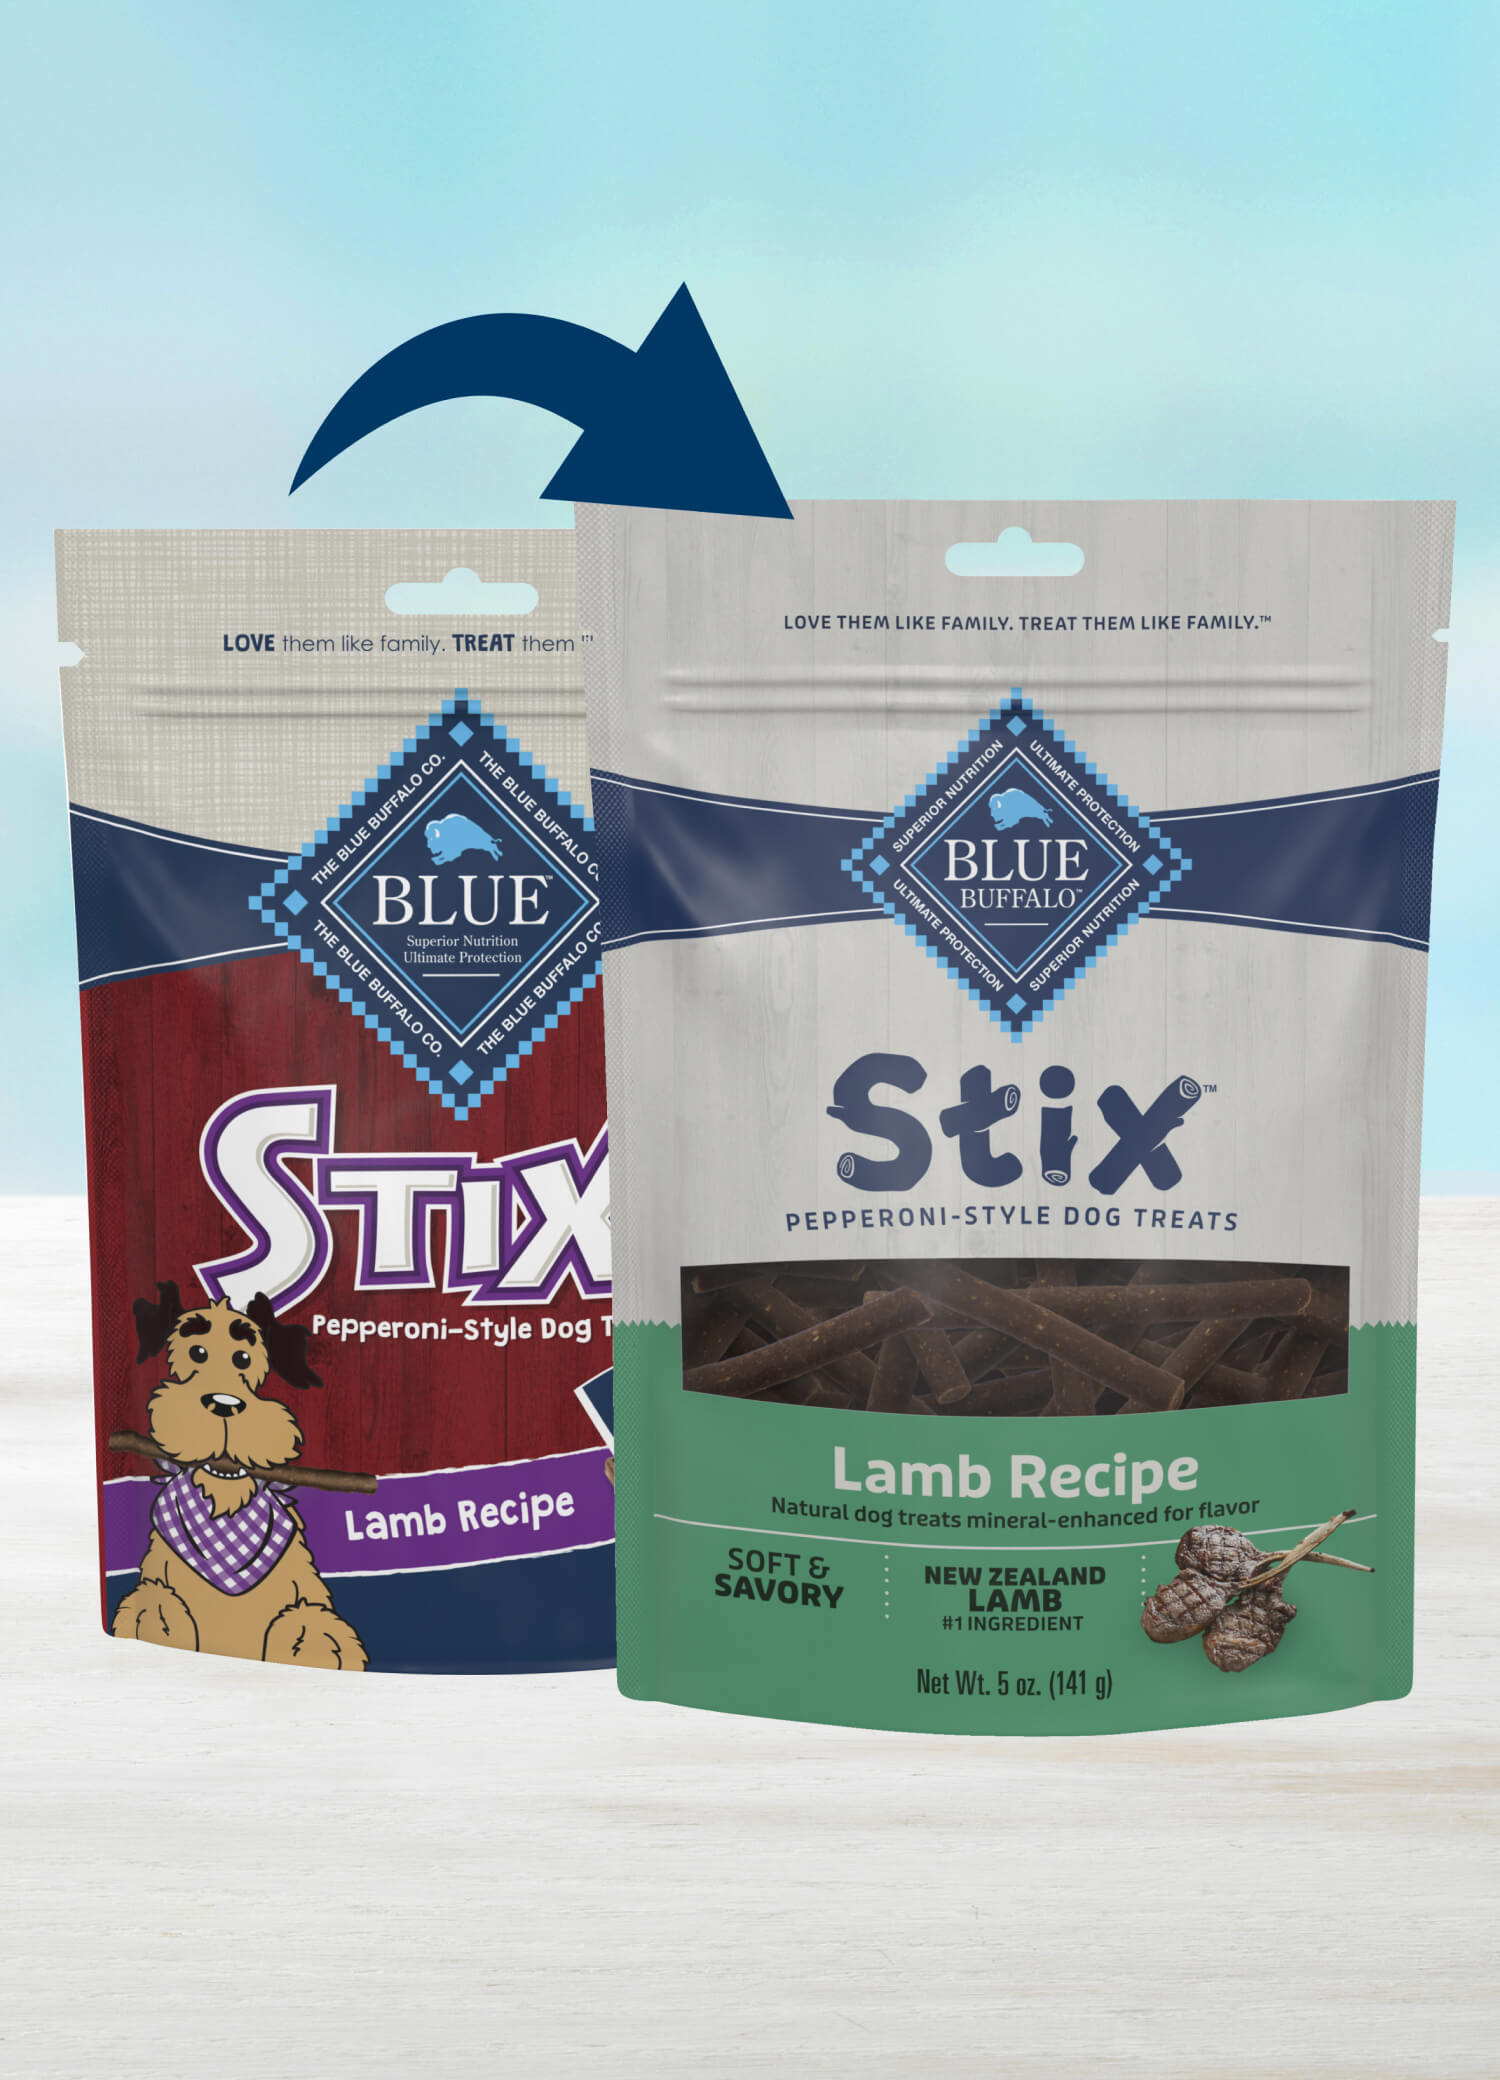 A bag of BLUE Stix Pepperoni-Style Dog Treats Lamb Recipe dog food